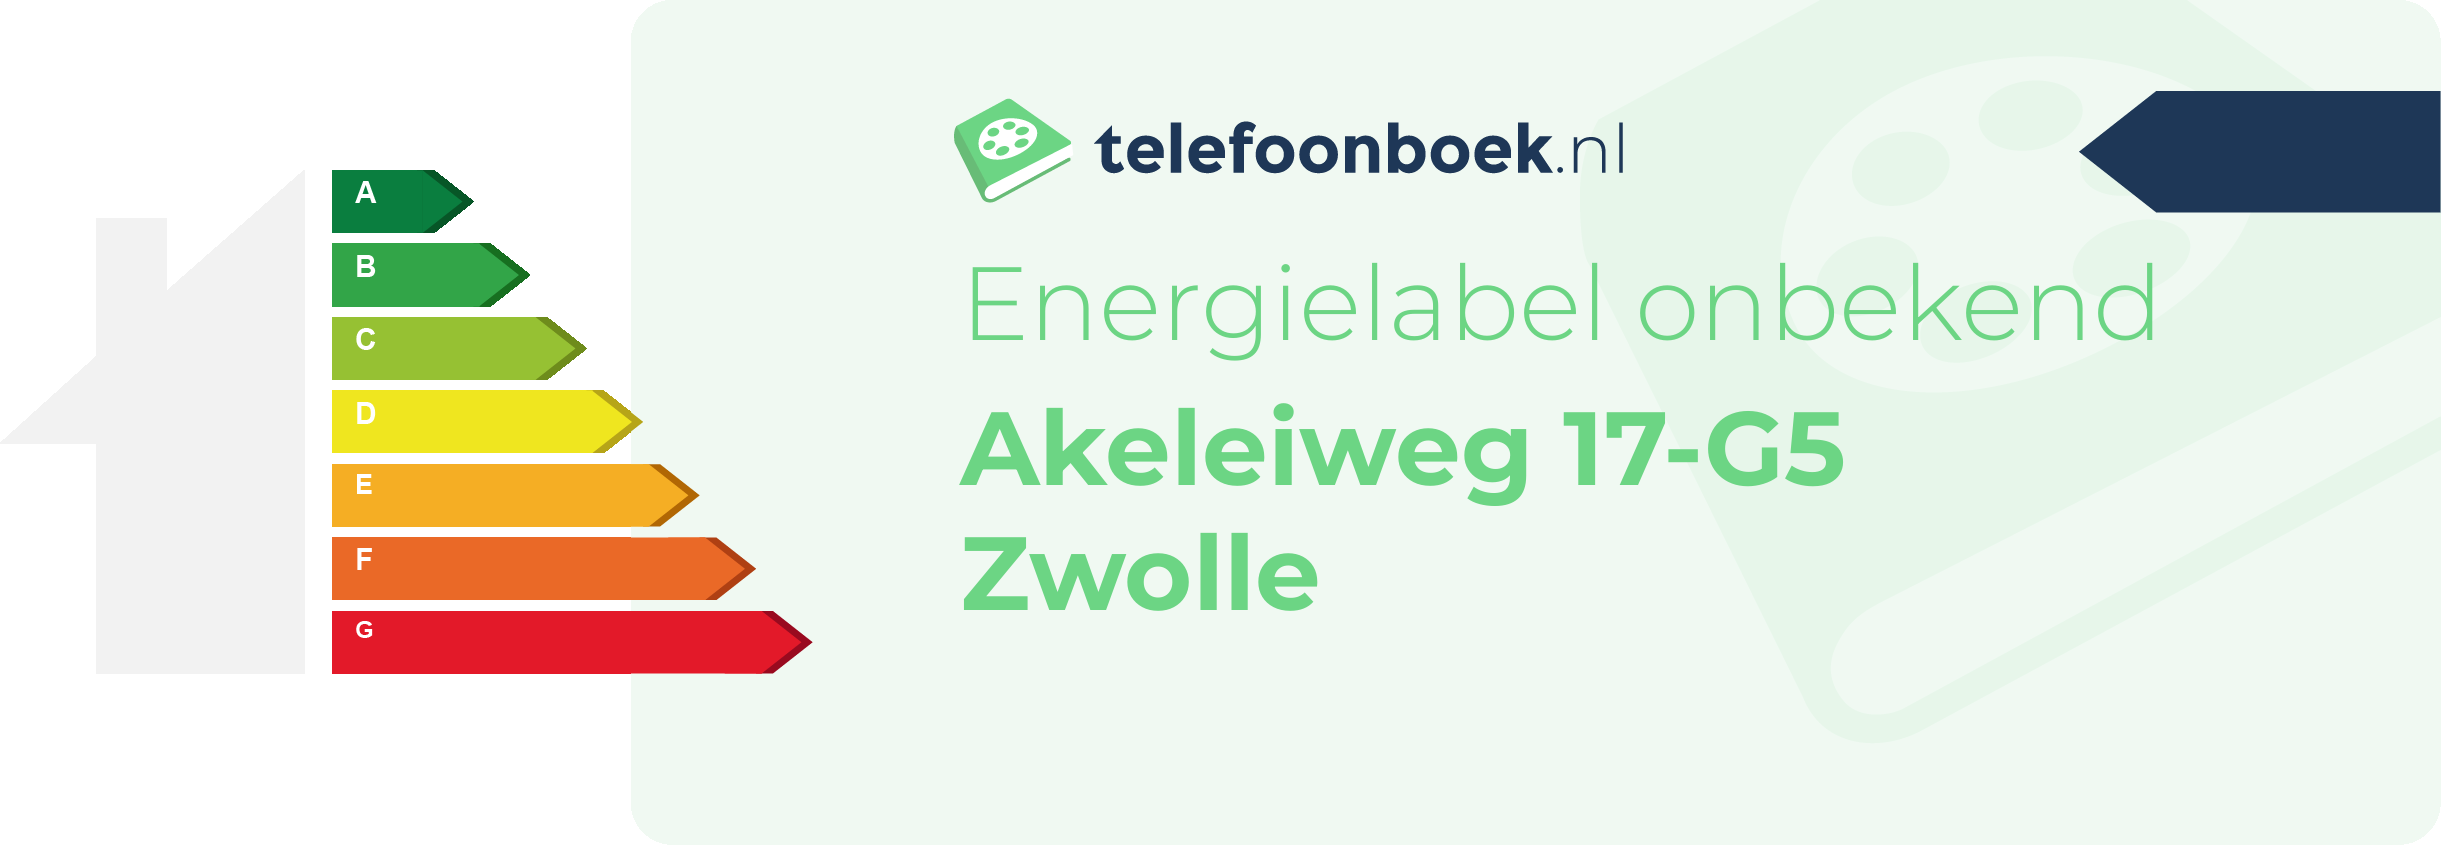 Energielabel Akeleiweg 17-G5 Zwolle